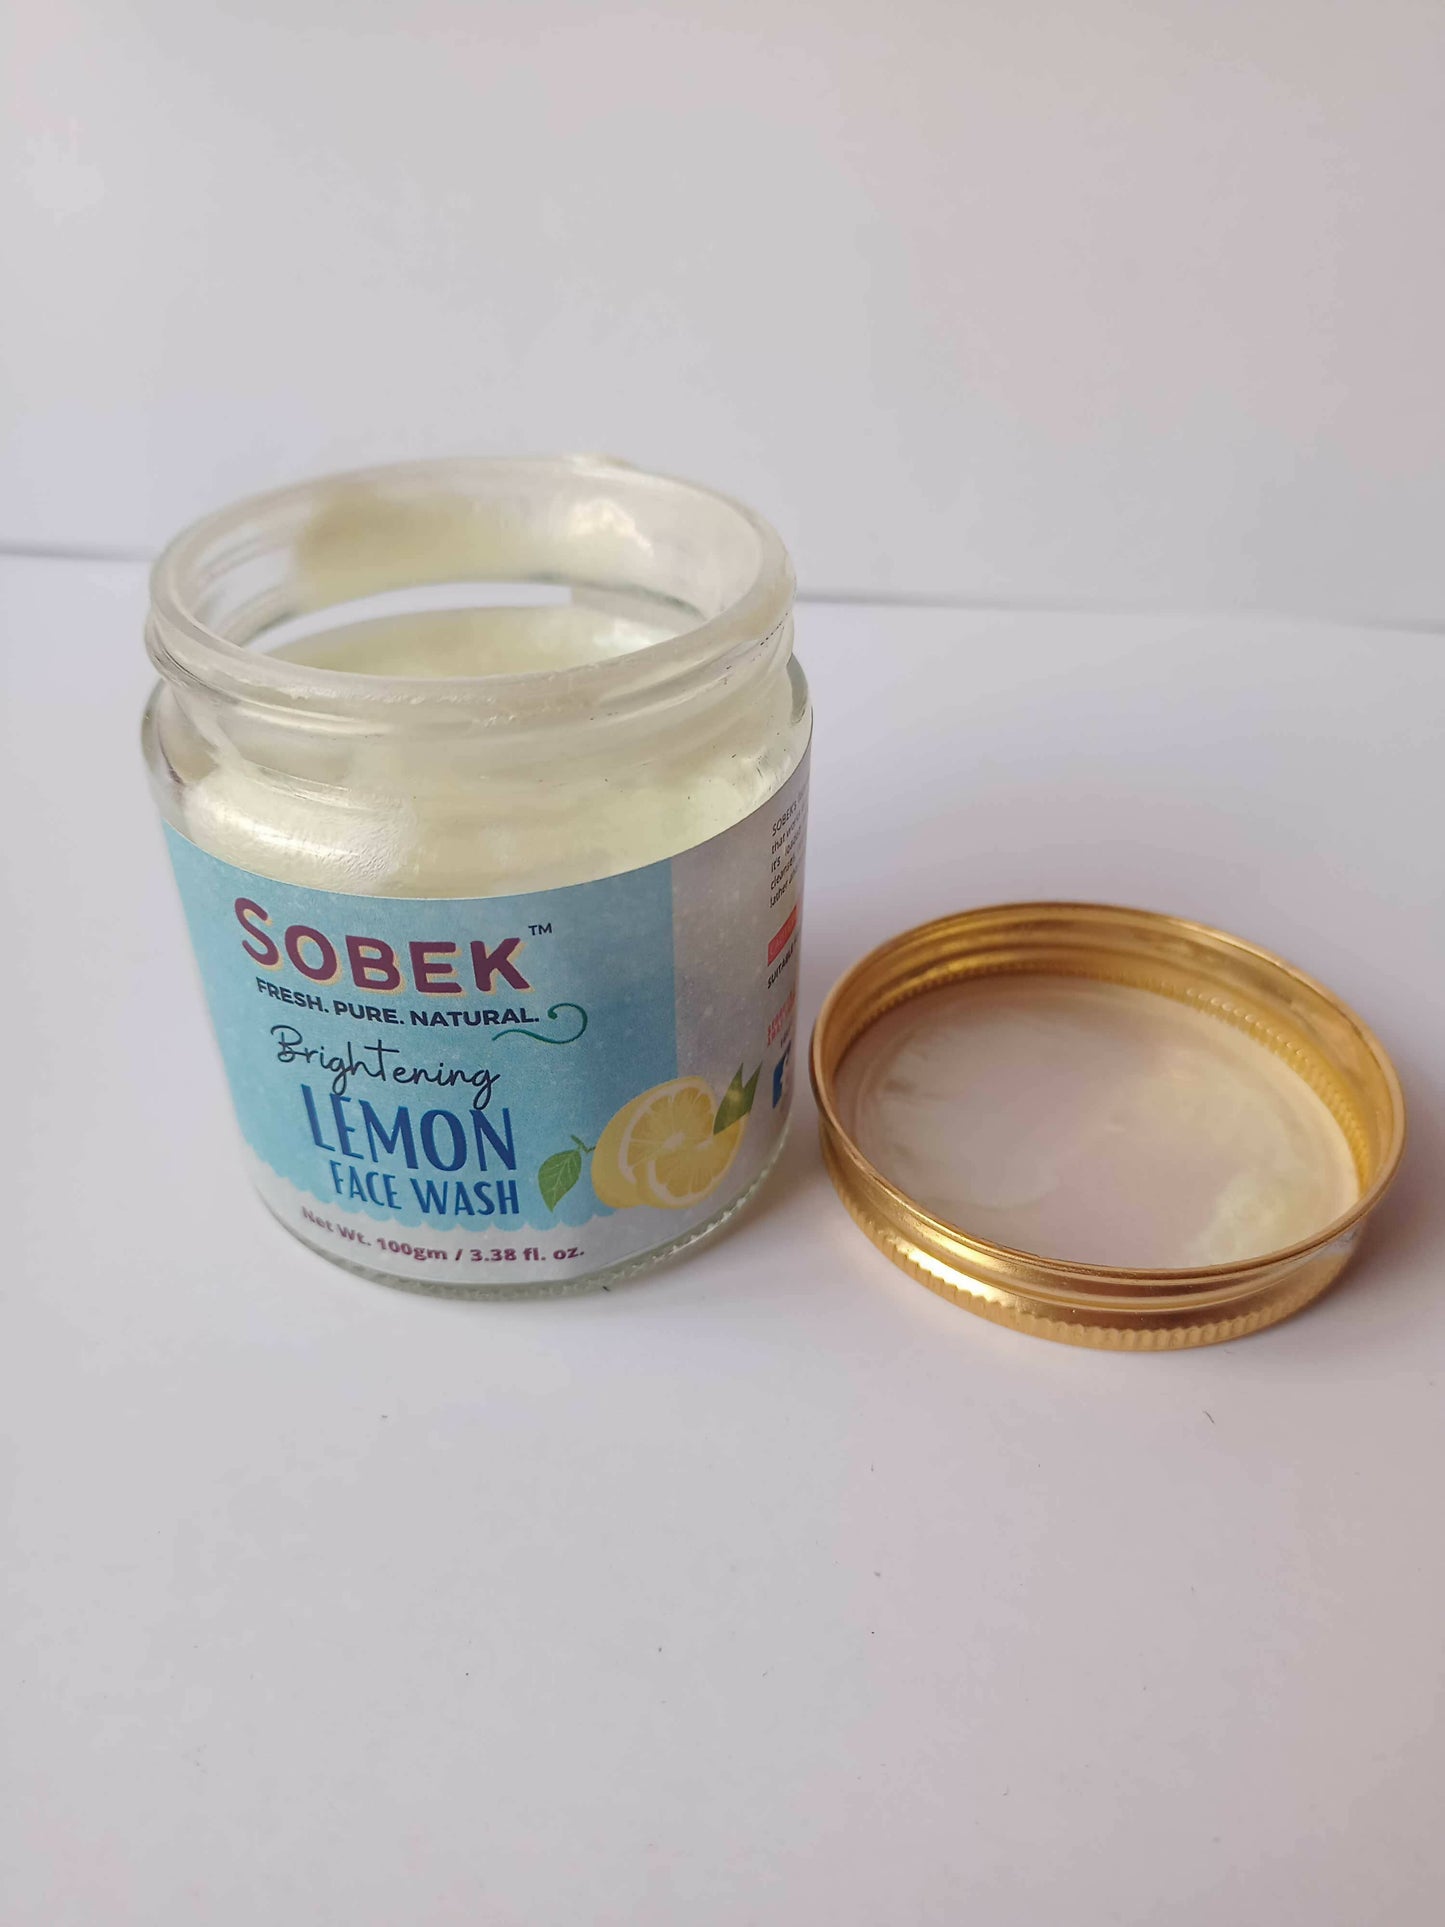 Sobek Naturals Lemon cleansing facewash | SLS and Paraben free